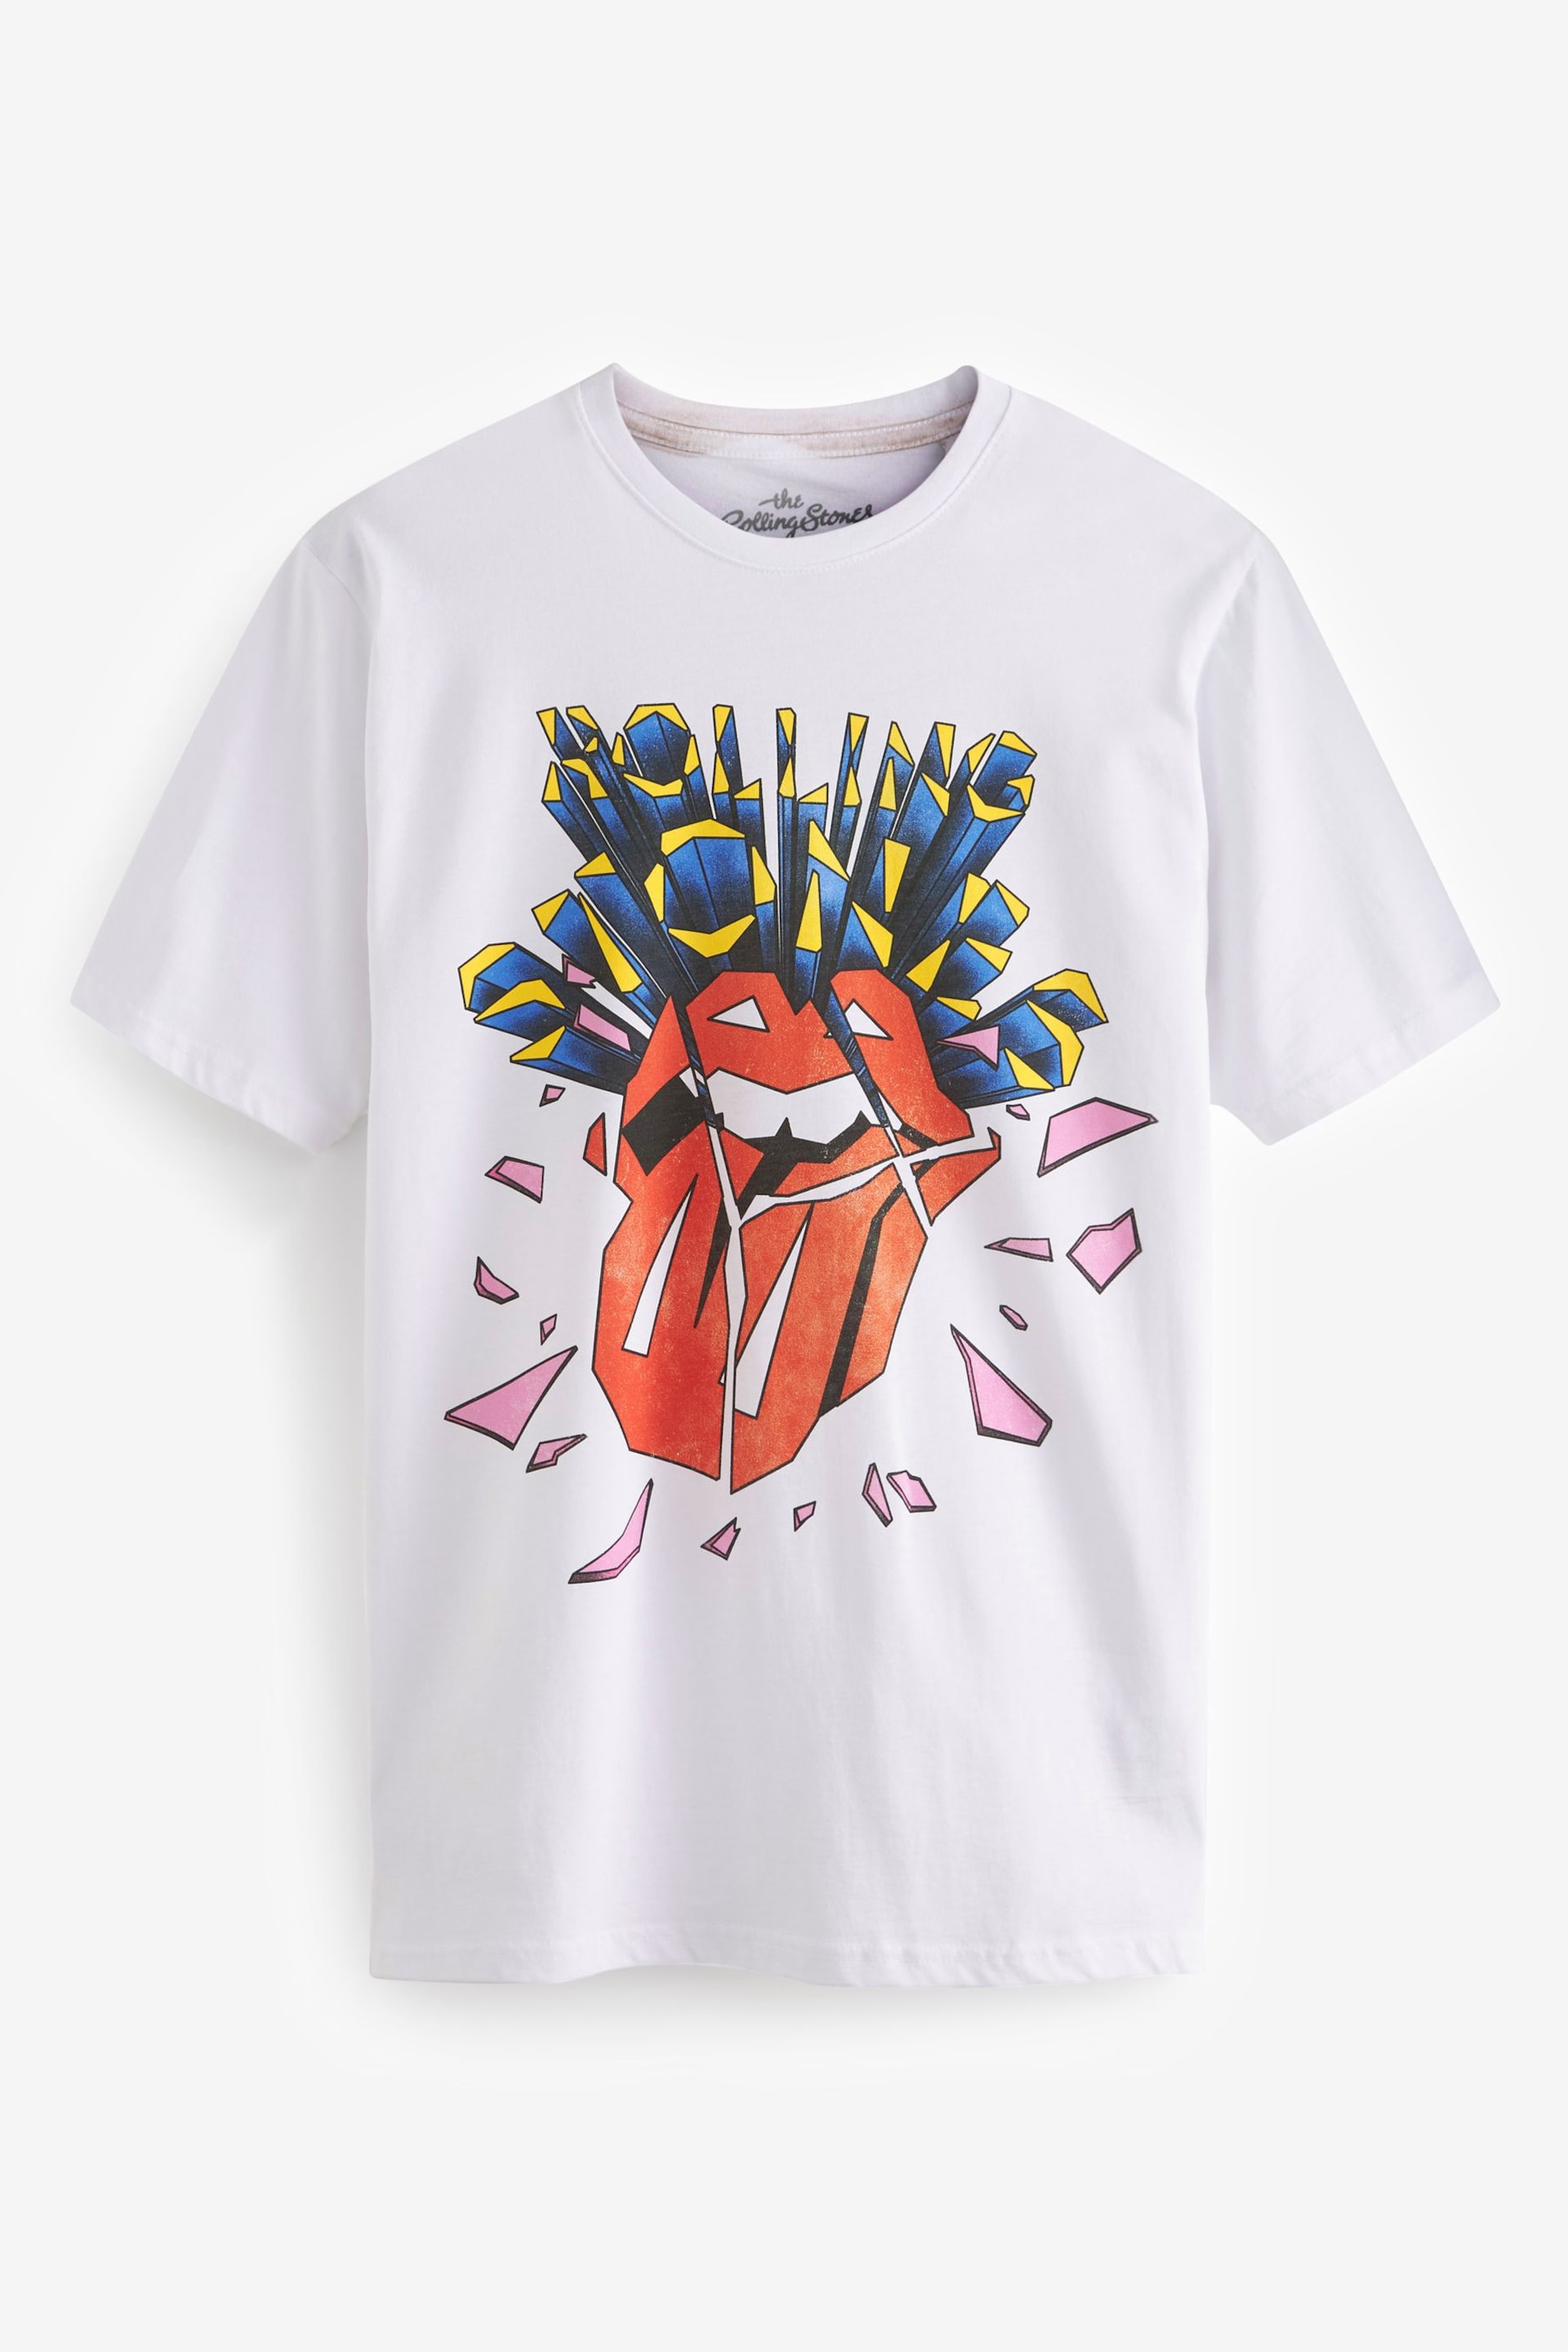 White Hackney Diamonds Rolling Stones License T-Shirt - Image 5 of 7